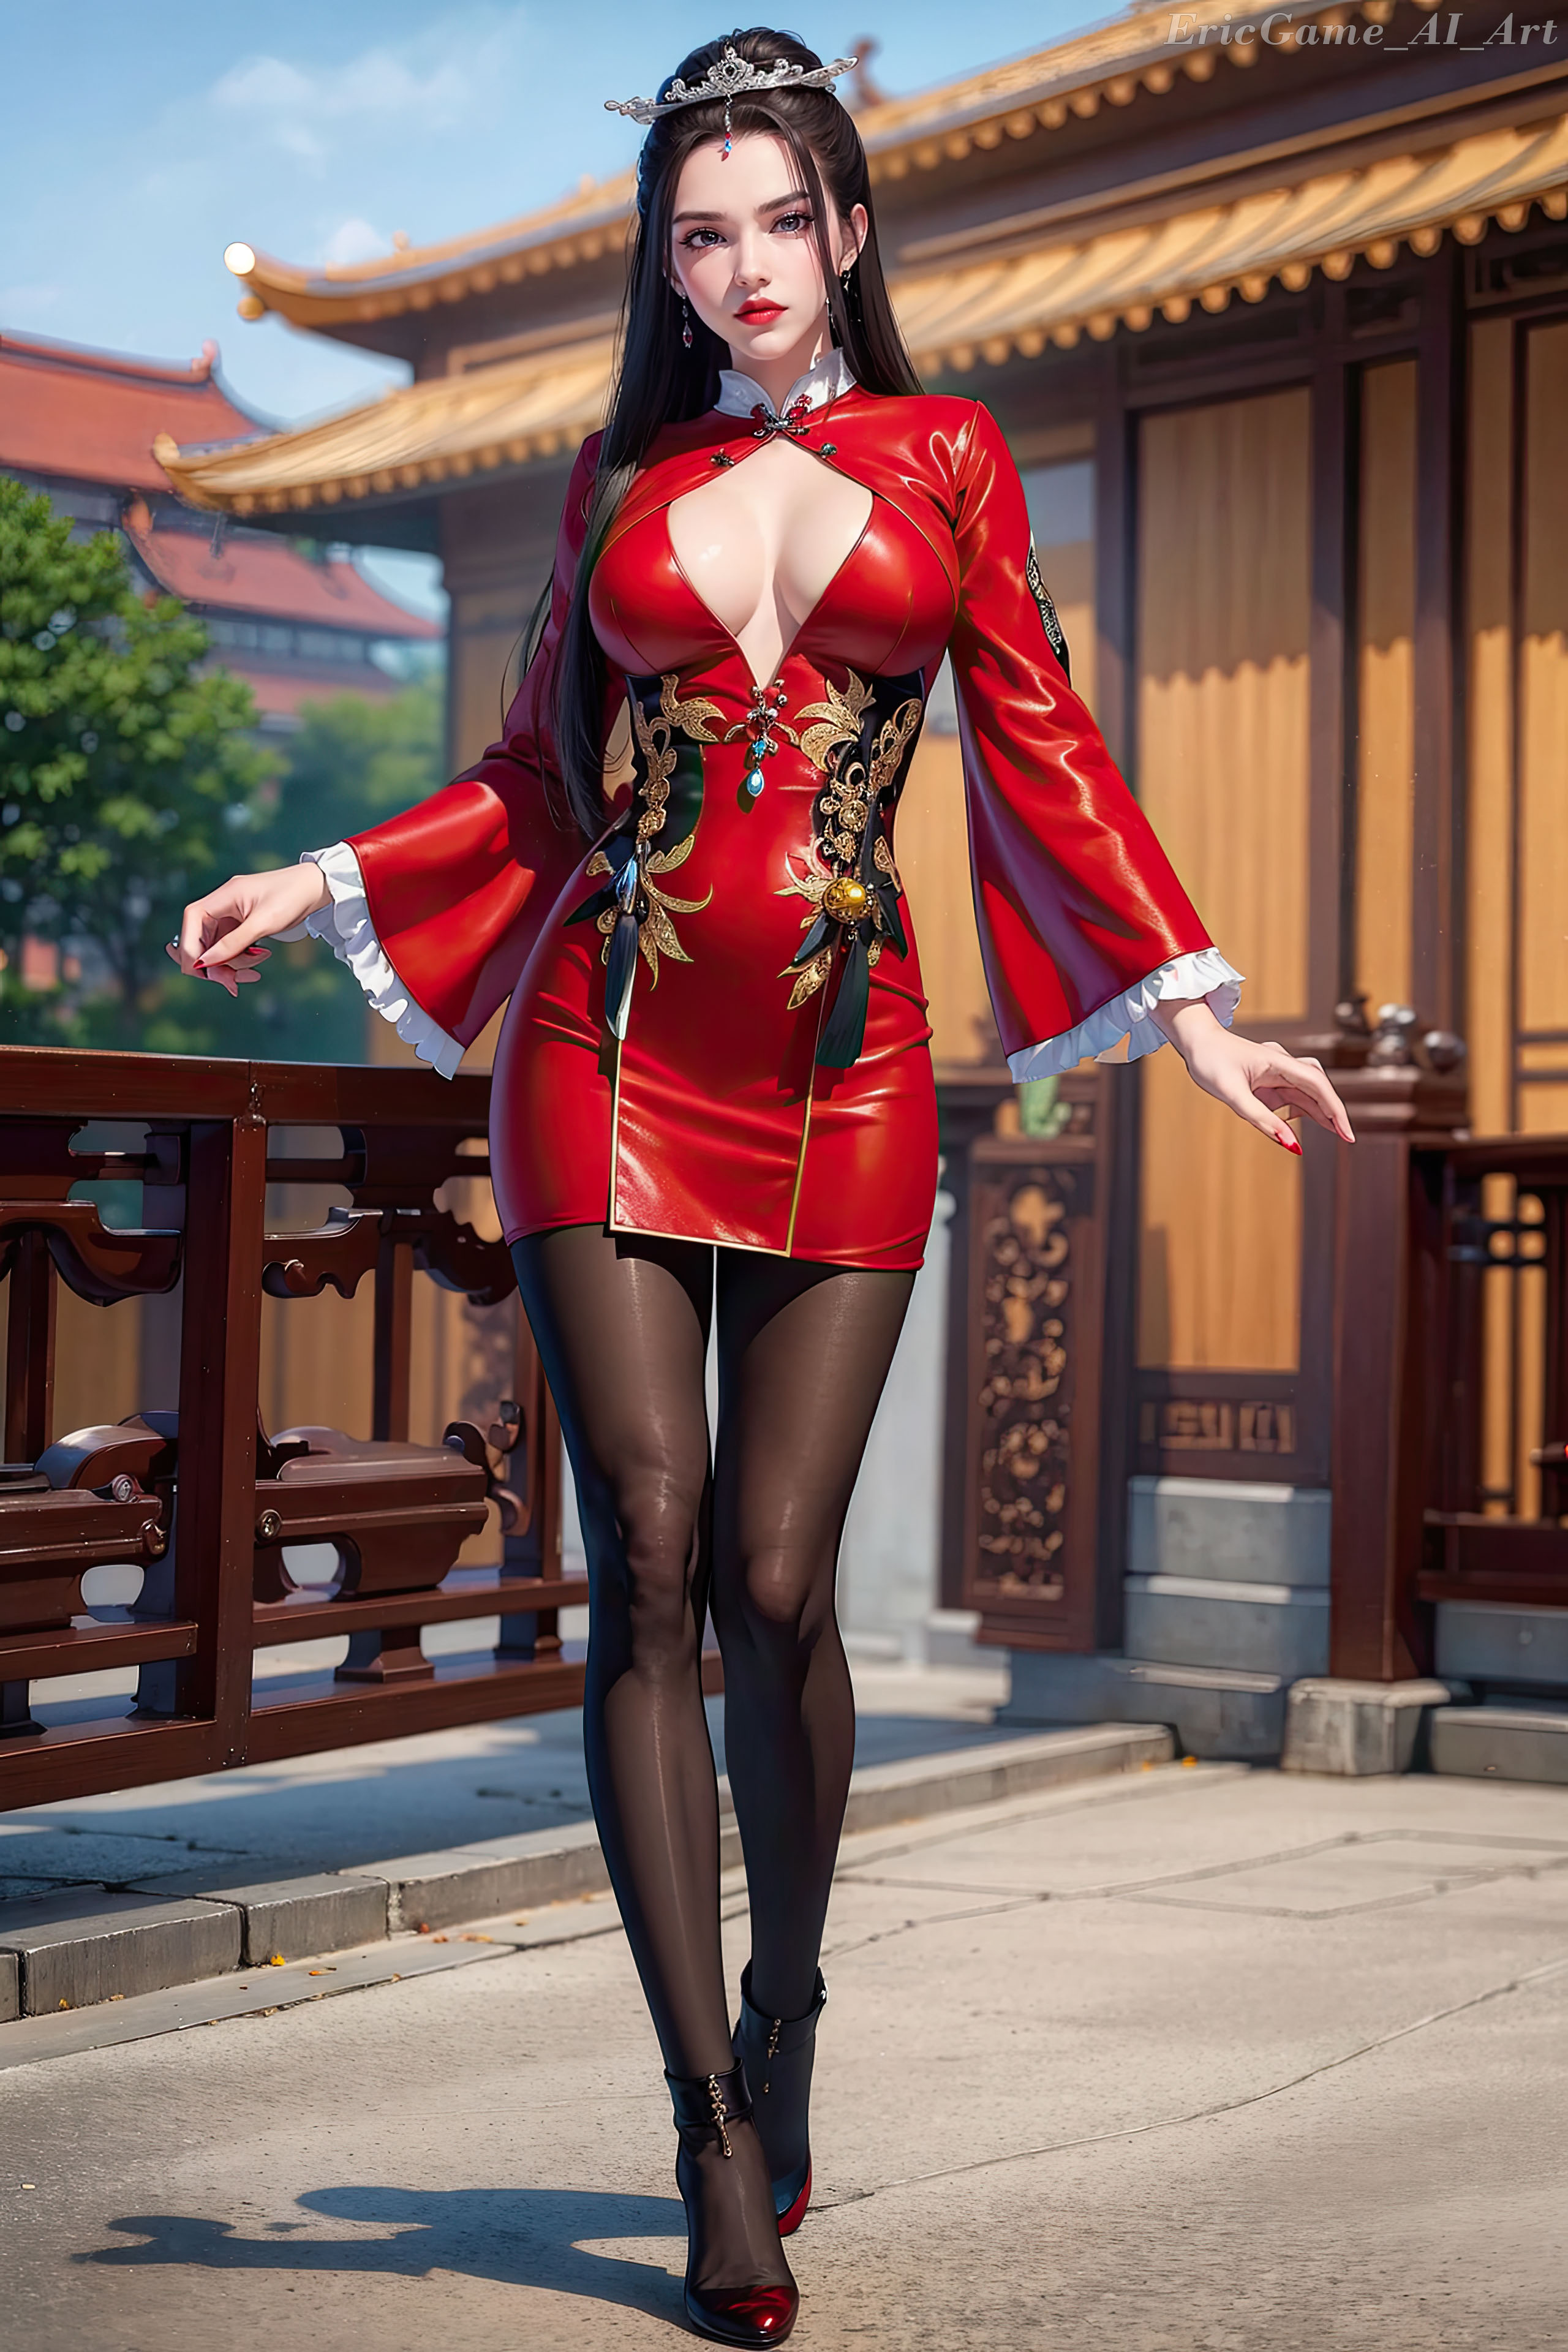 General 2560x3840 AI art Ericgame stockings red dress tight dress